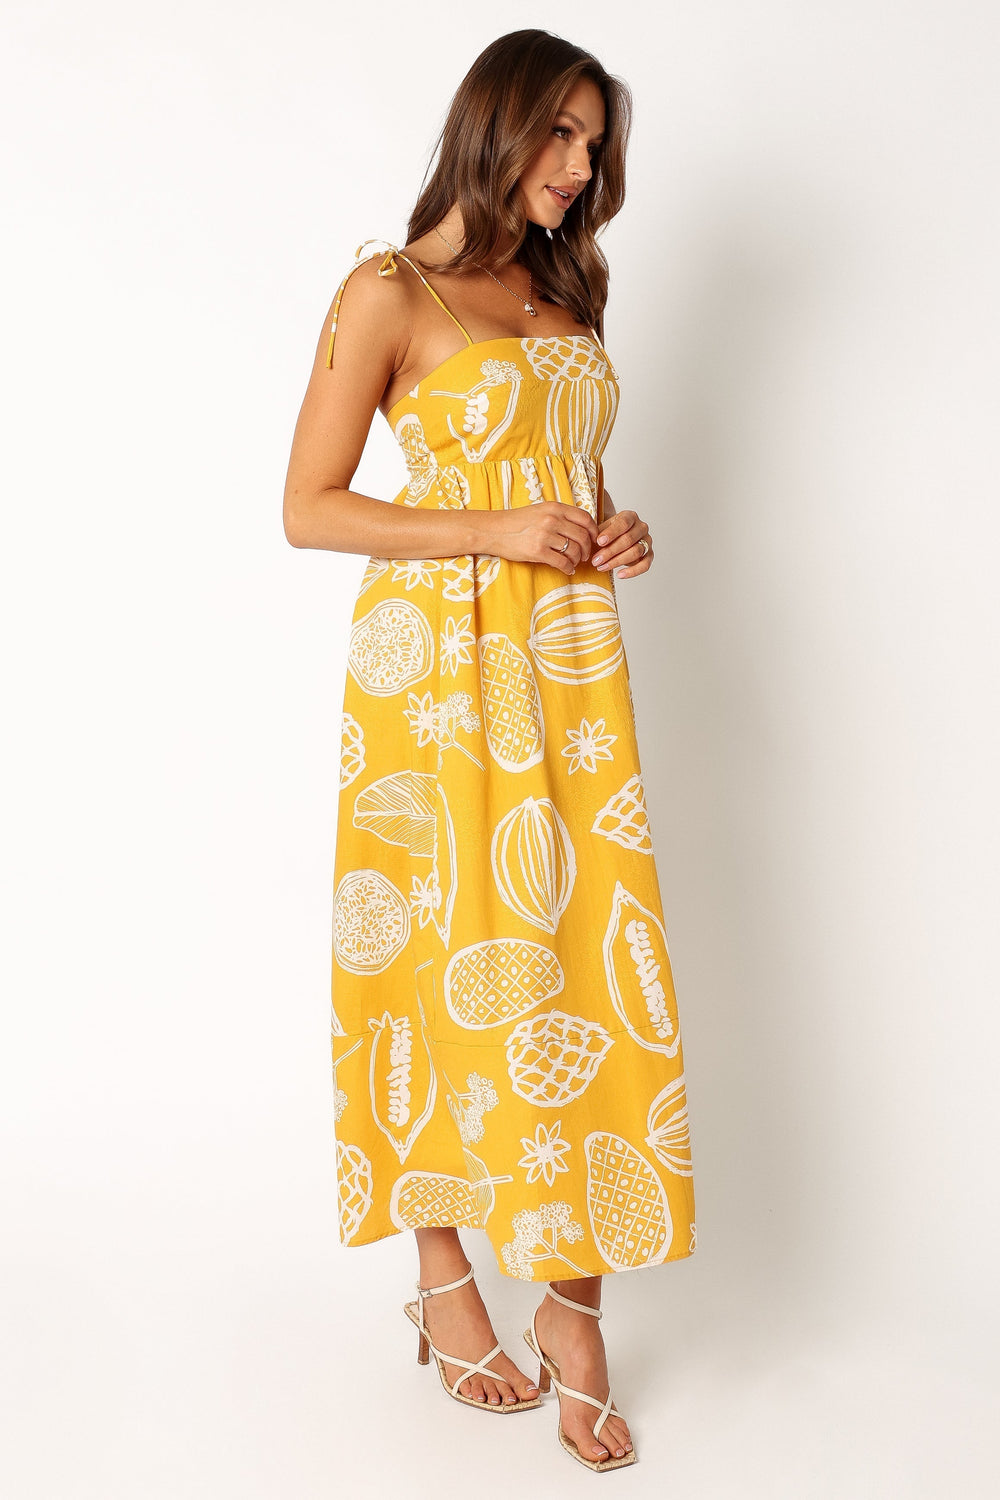 Petal and Pup USA DRESSES Sloane Maxi Dress - Yellow